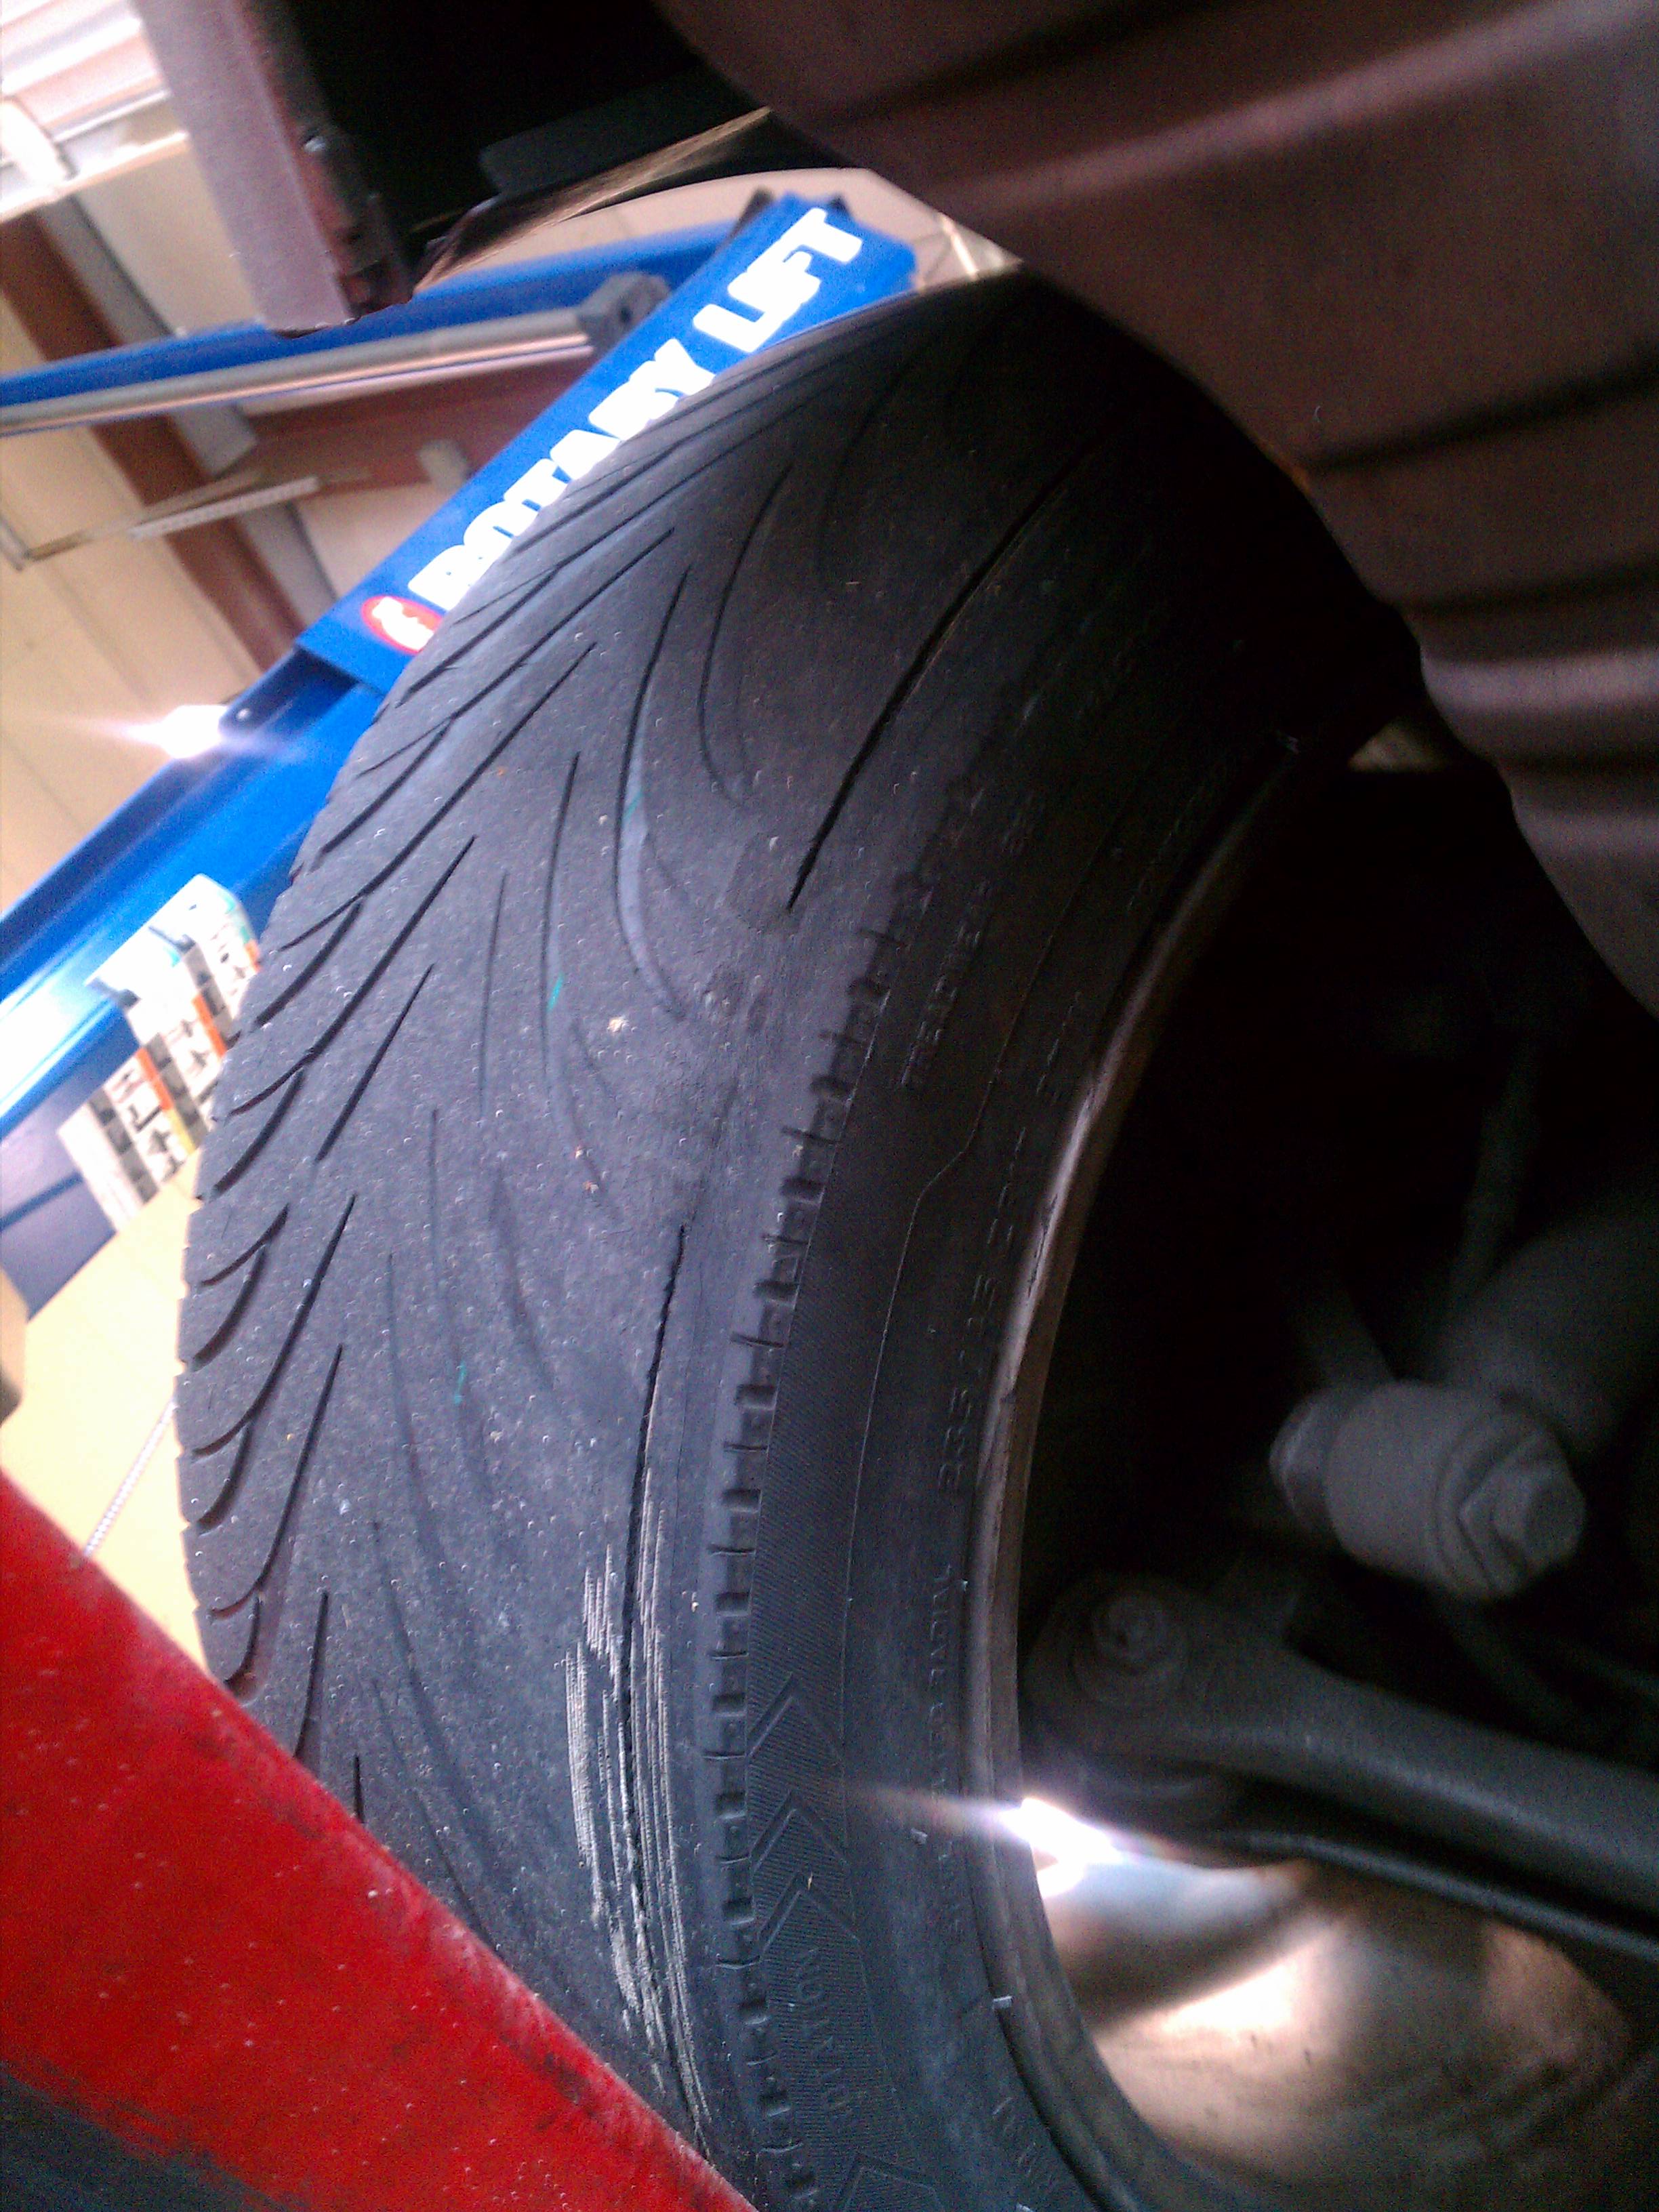 Worse tire...